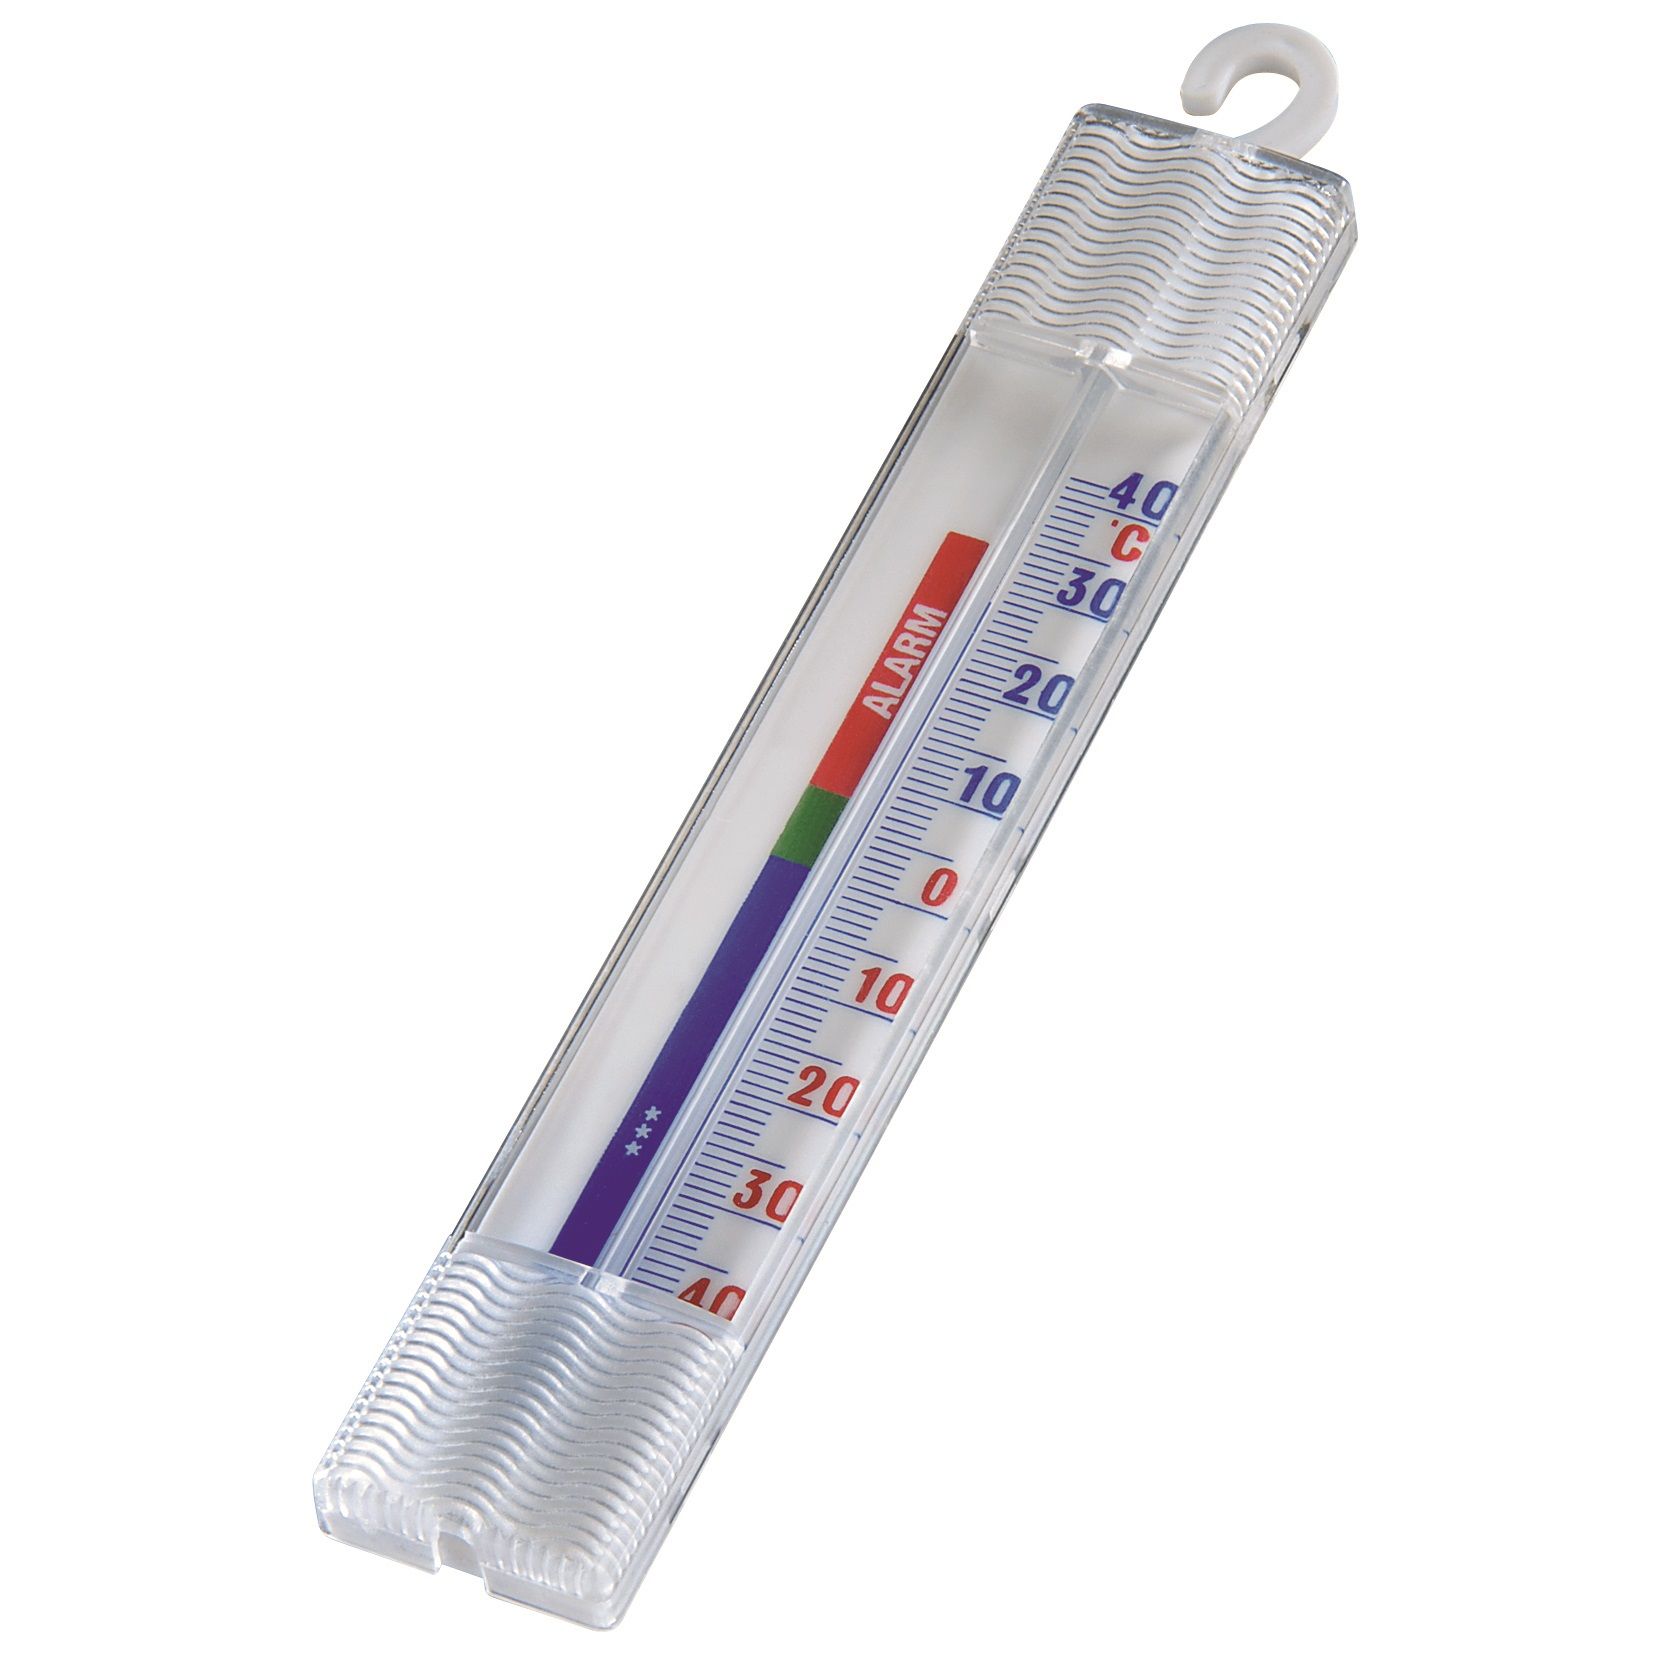  Termometru analog Xavax 110822 pentru frigider/congelator 